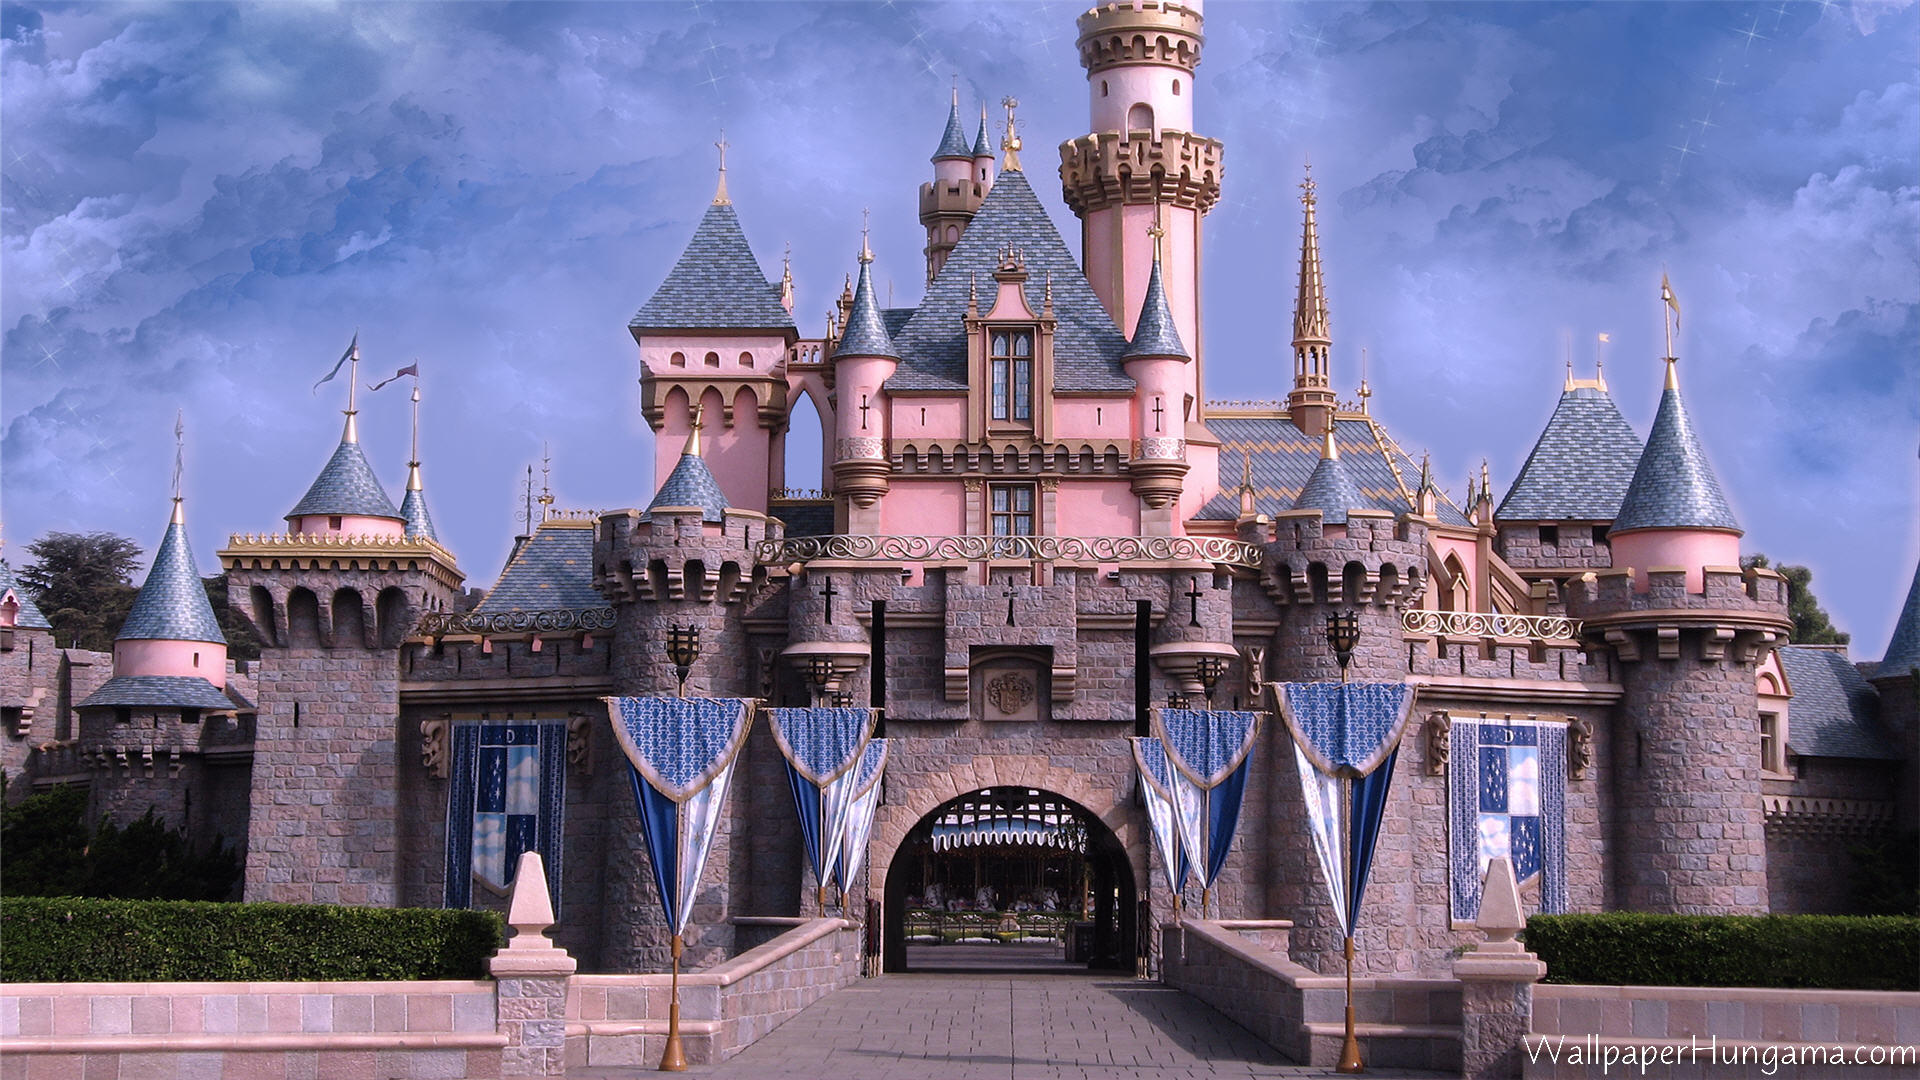 Castle, Disney, And Disneyland Image - Disneyland, Sleeping Beauty Castle - HD Wallpaper 